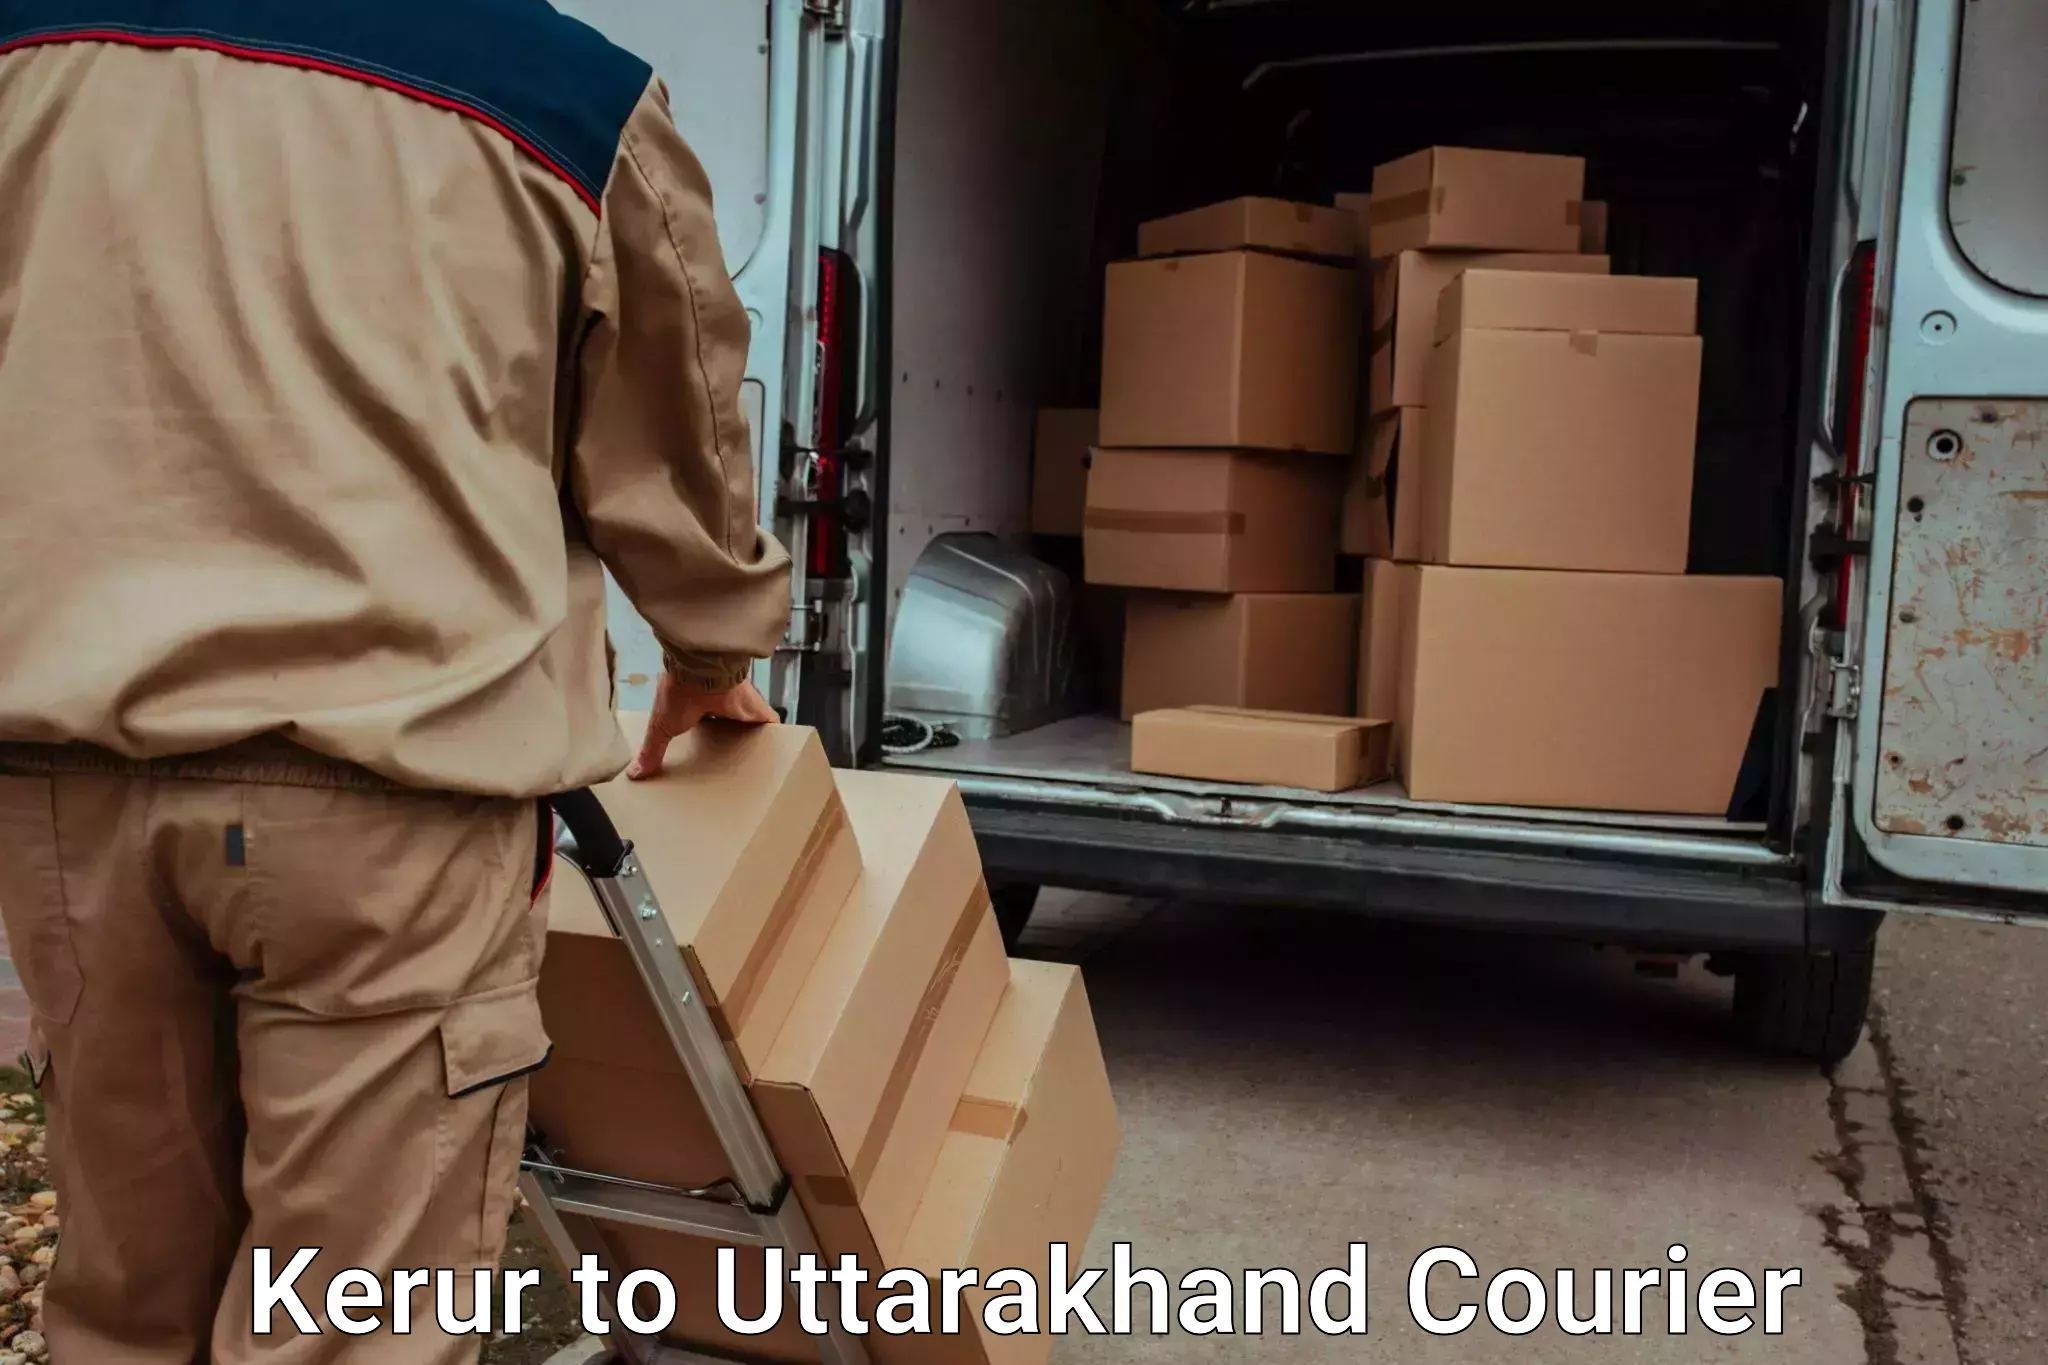 Luggage shipment tracking Kerur to Rishikesh